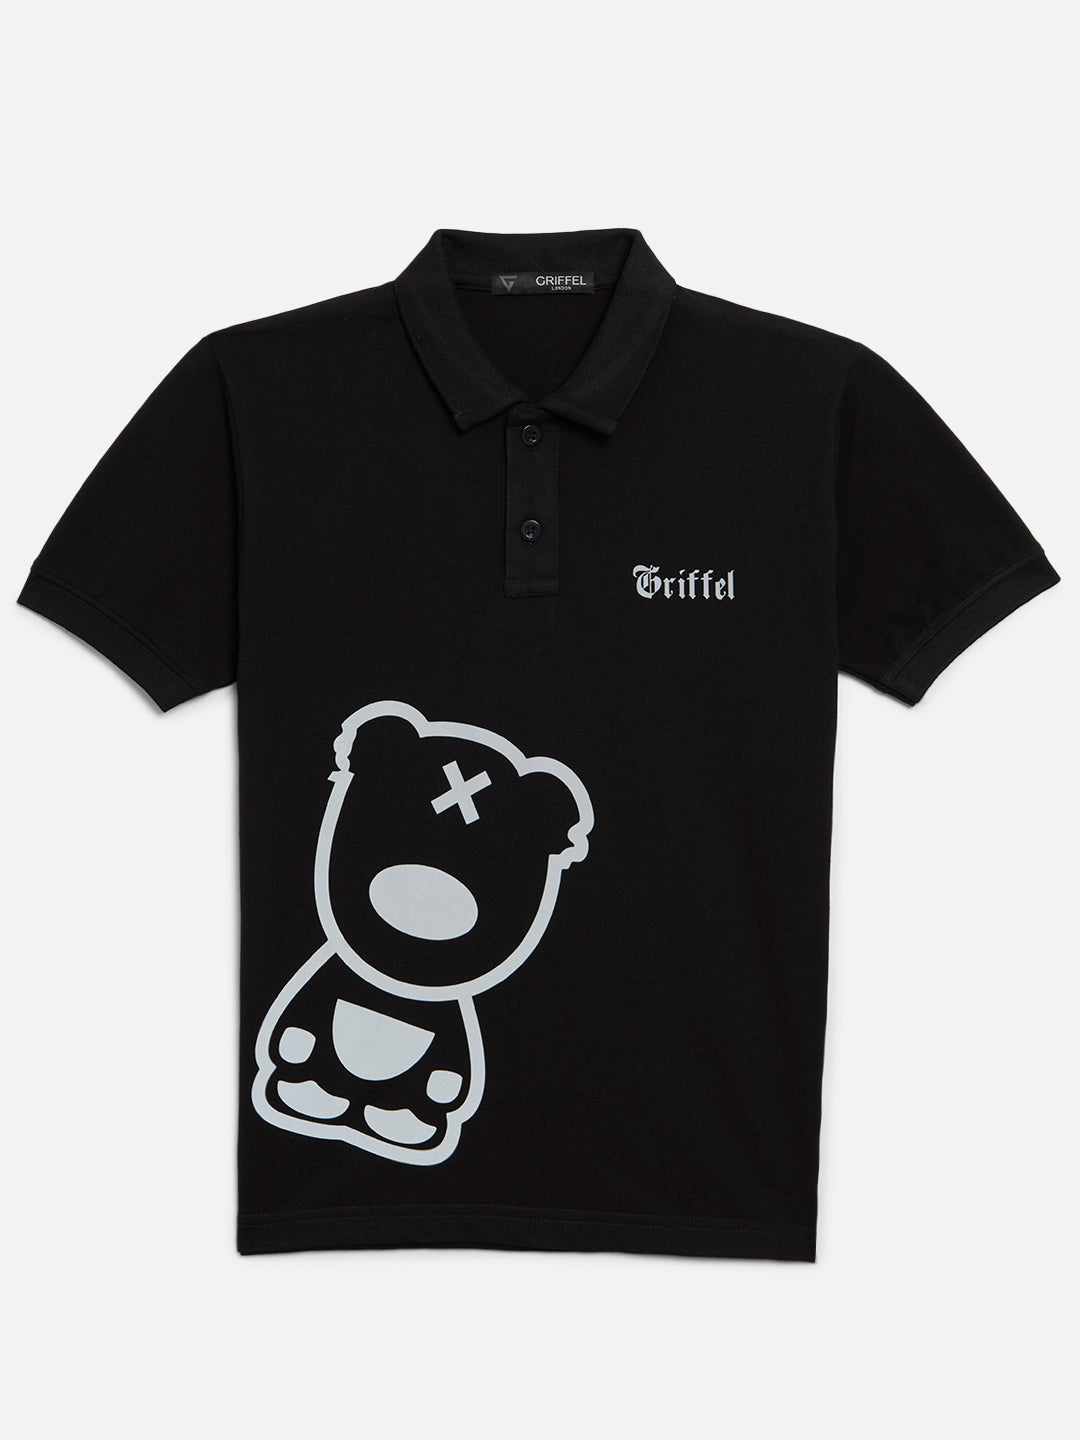 GRIFFEL Boys Kids Black Printed Polo T-shirt - griffel